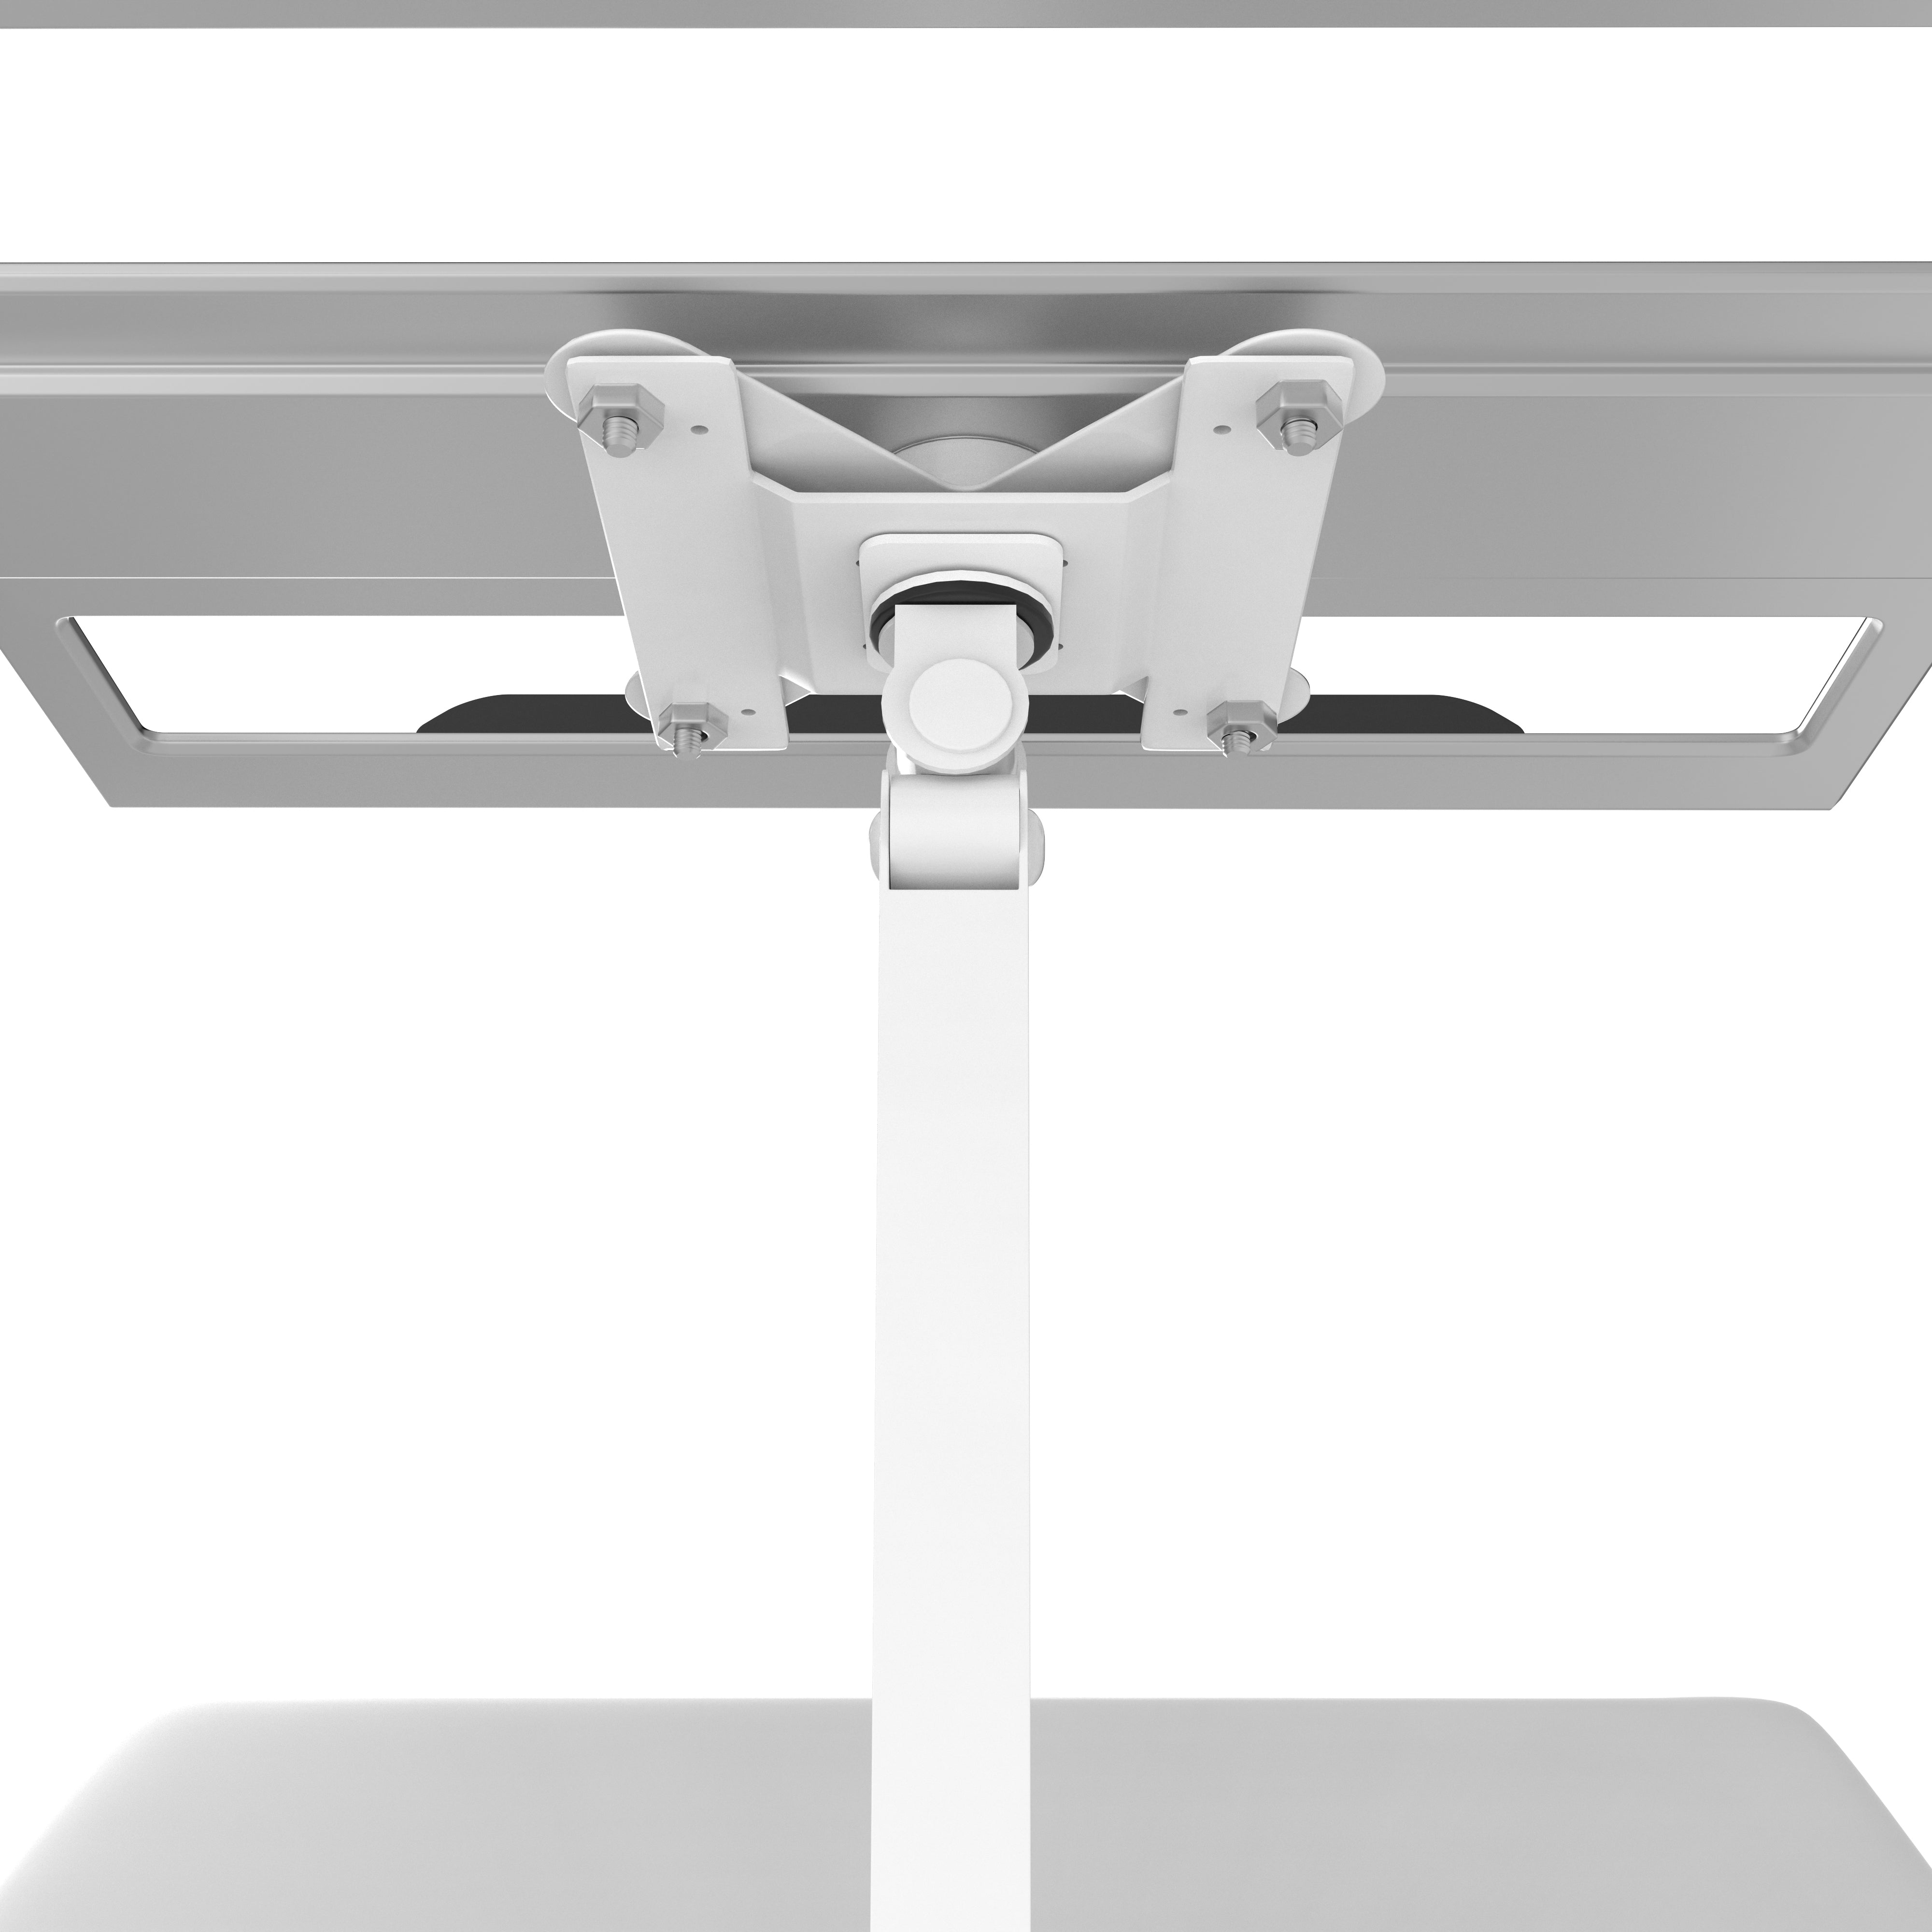 Height-Adjustable Rolling Workstation Cart with Laptop Holder